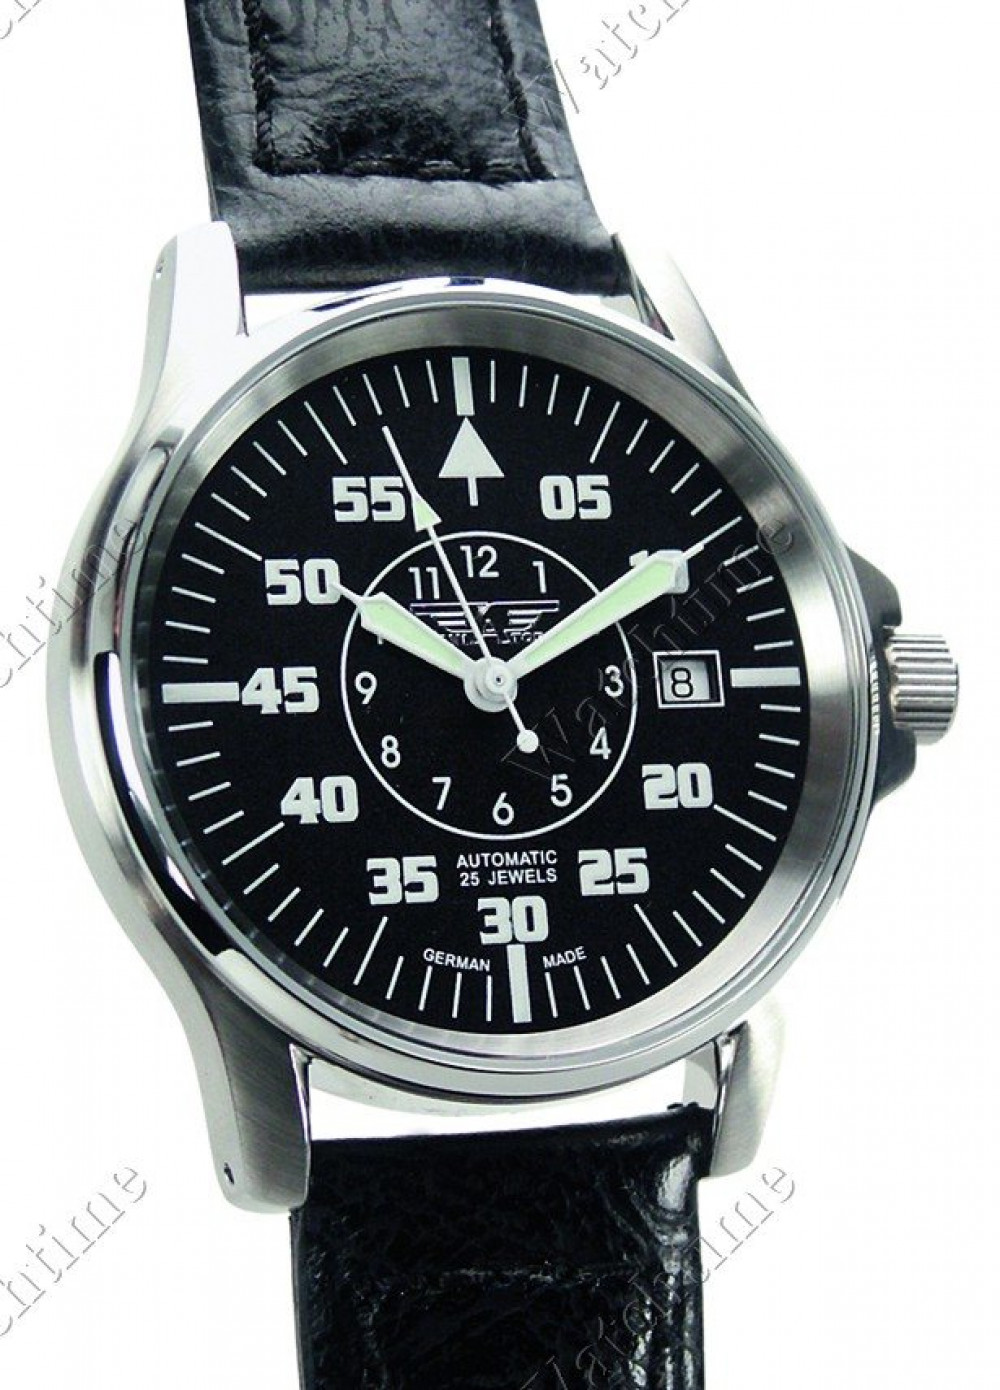 Zegarek firmy Aviator (Germany), model Pilotenuhr